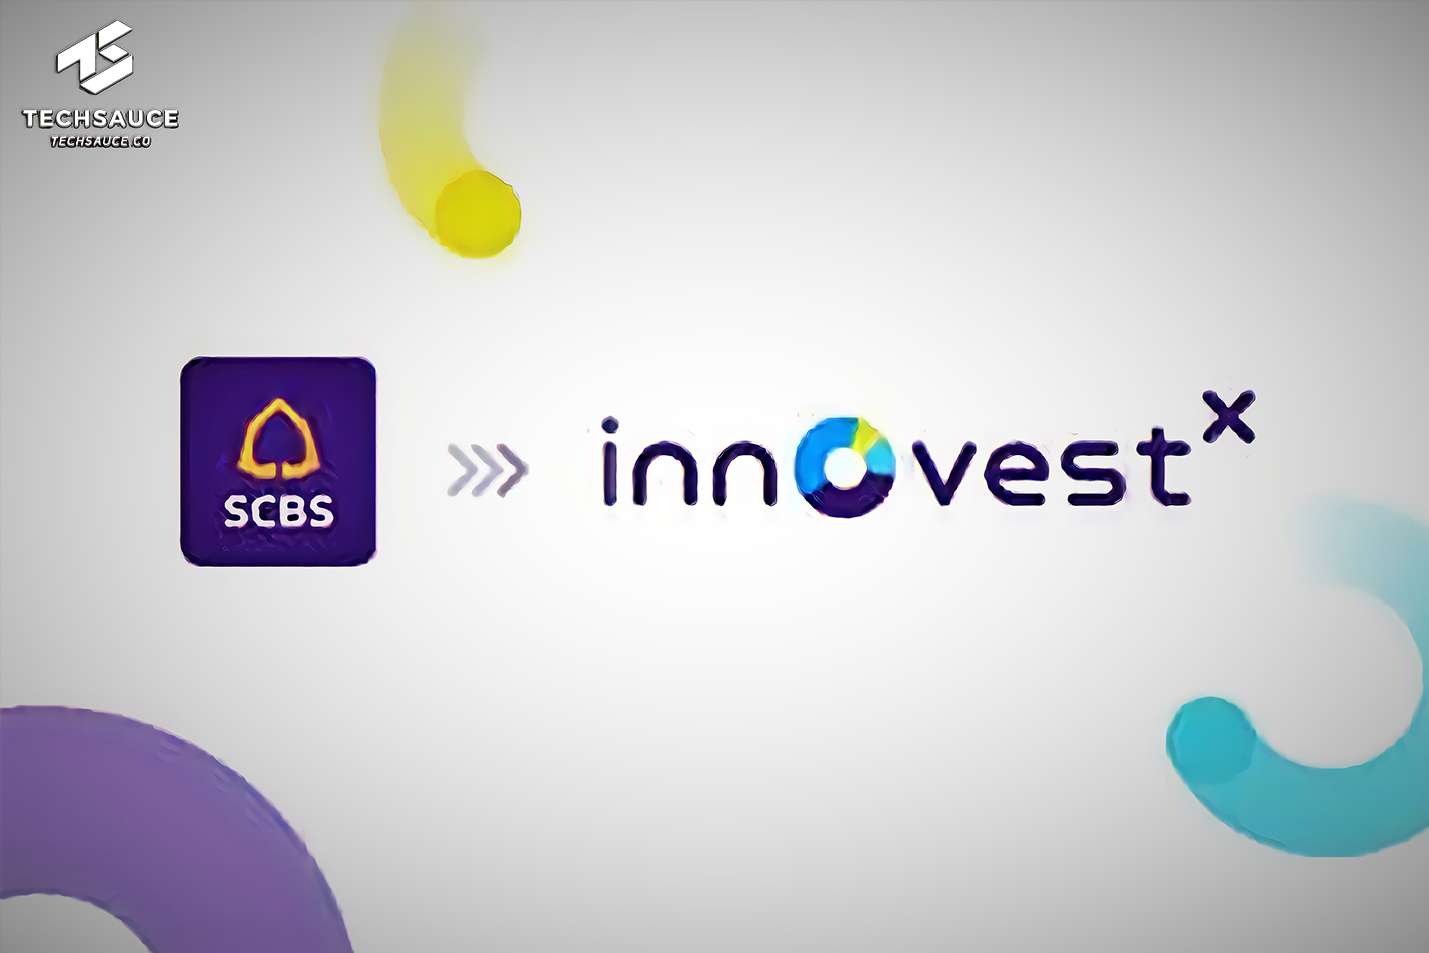 Scbs เปลี่ยนชื่อเป็น Innovestx พร้อมเตรียมเปิดตัวแอปฯใหม่ มุ่งสู่ Fintech  ระดับภูมิภาค | Techsauce